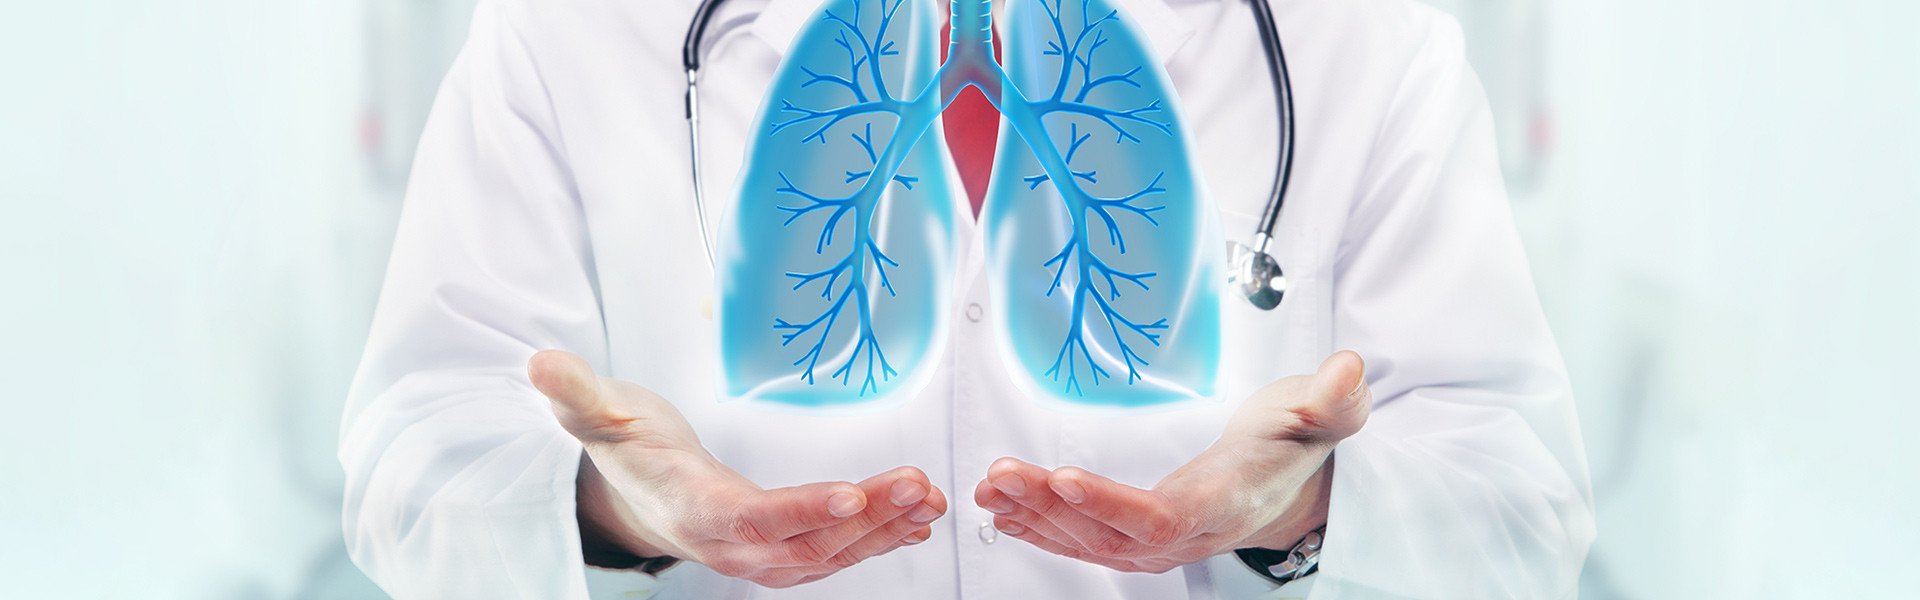 Plicní ambulance a kalmetizace (TBC)